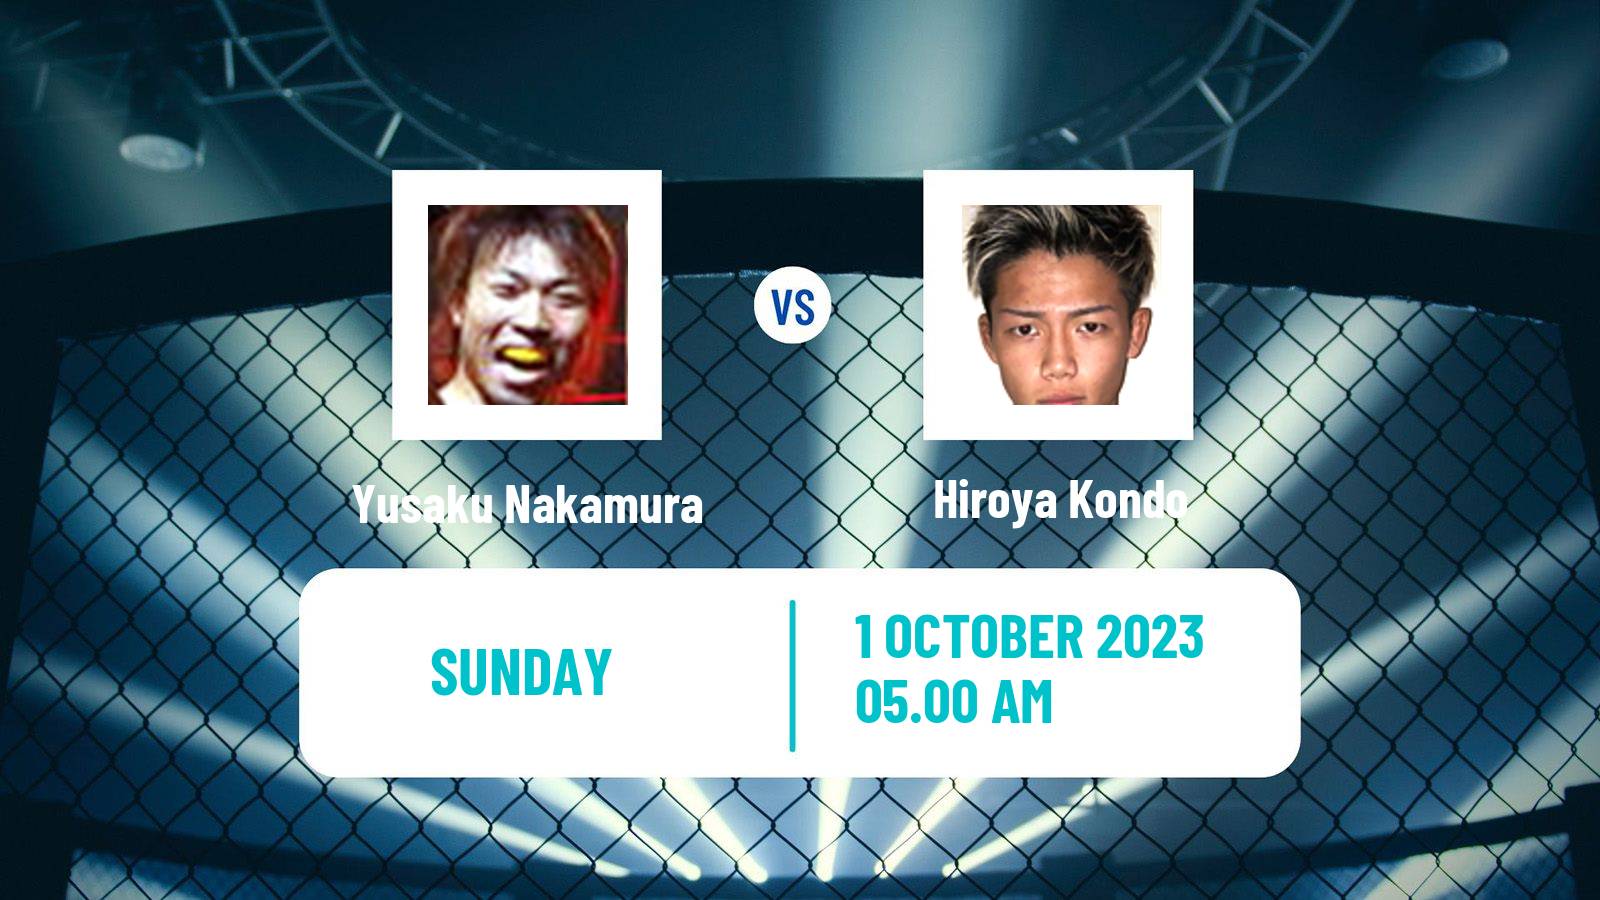 MMA Catchweight Rizin Men Yusaku Nakamura - Hiroya Kondo